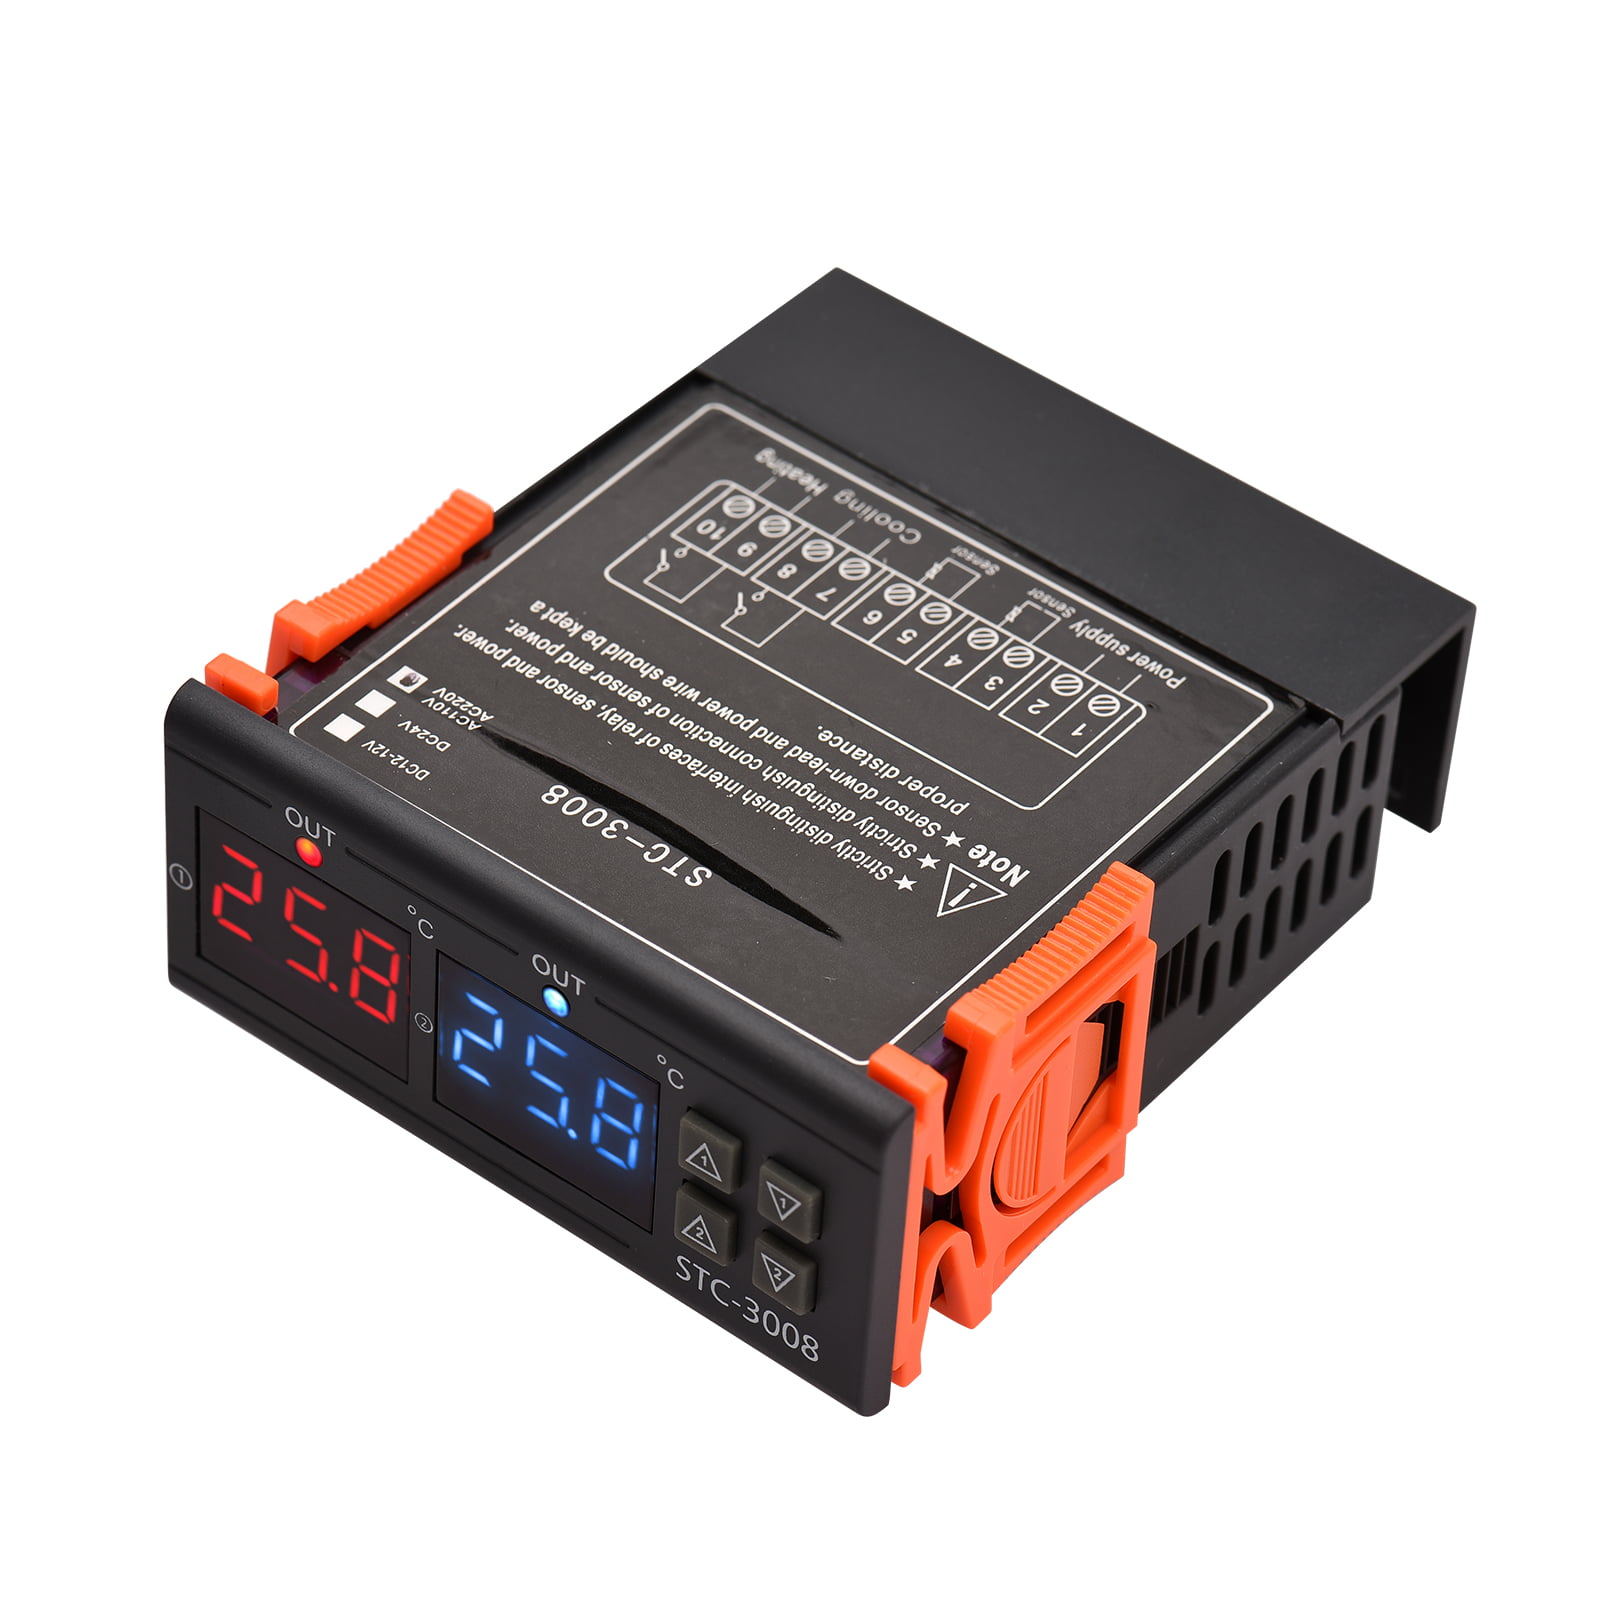 STC-3008 10A 220V Digitaler Temperaturregler Grad Sensor Thermostat Instrument 